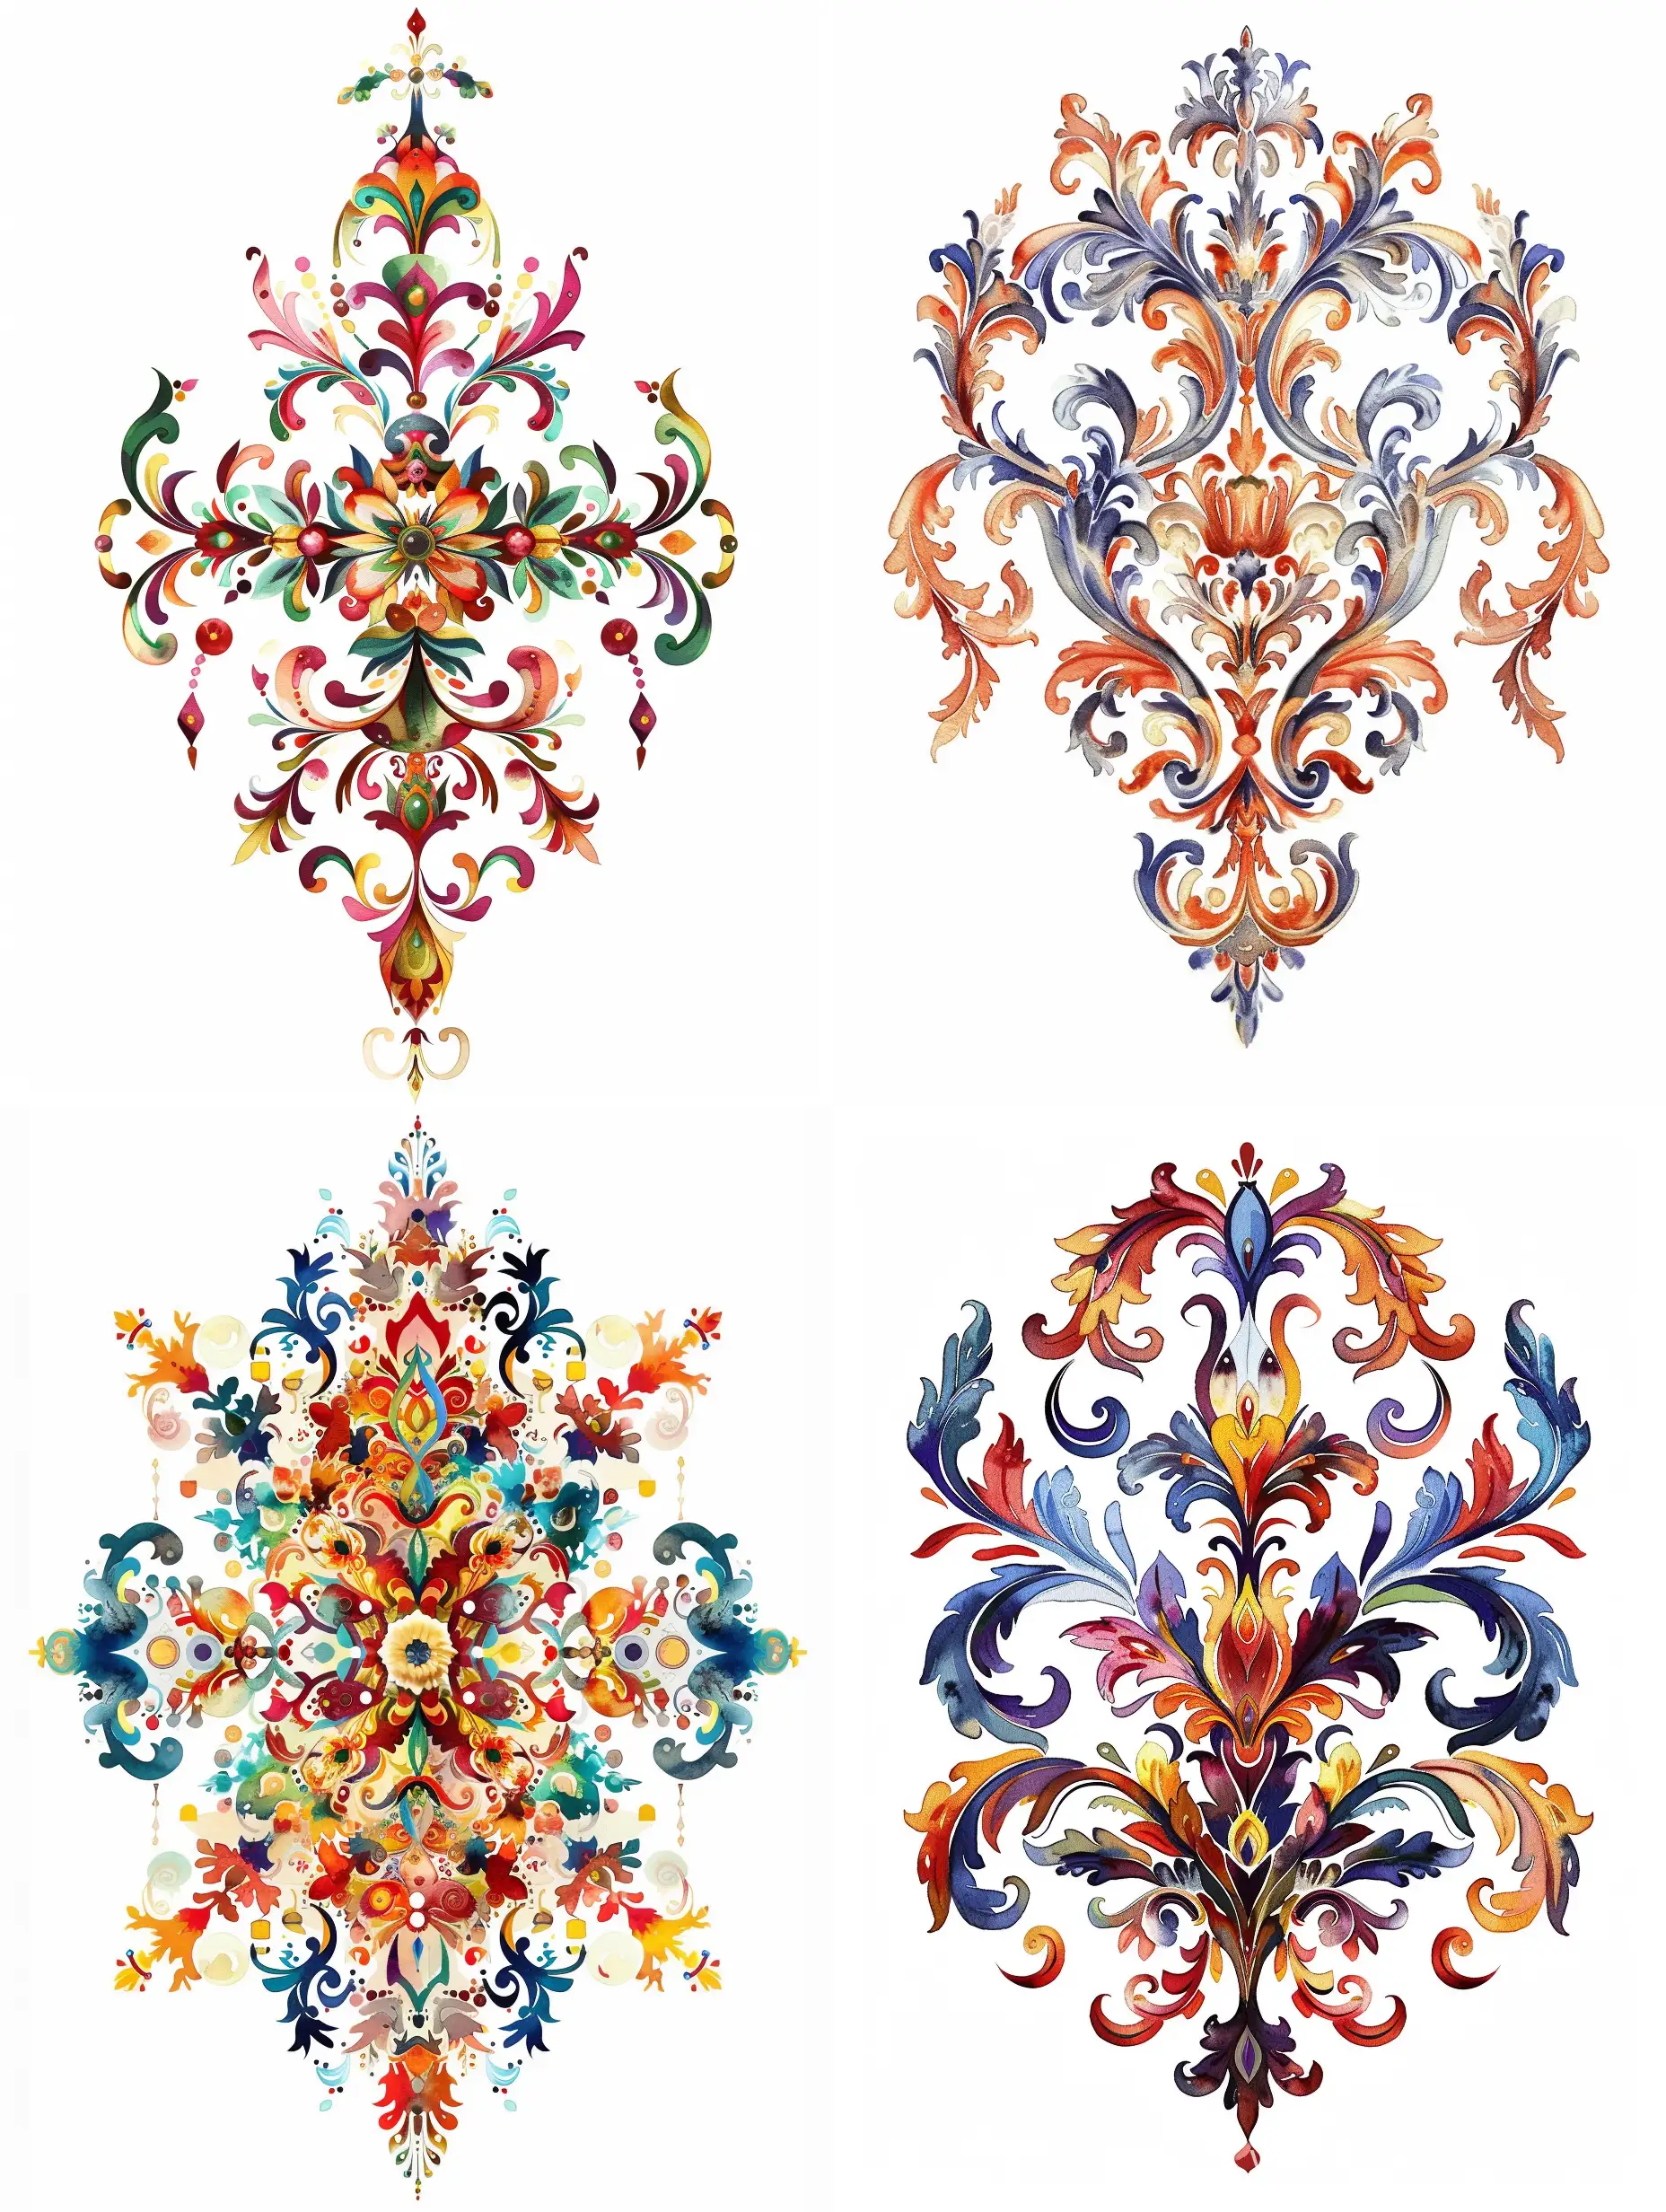 Ornamental-Symmetrical-Geometric-Baroque-Watercolor-Illustration-on-White-Background